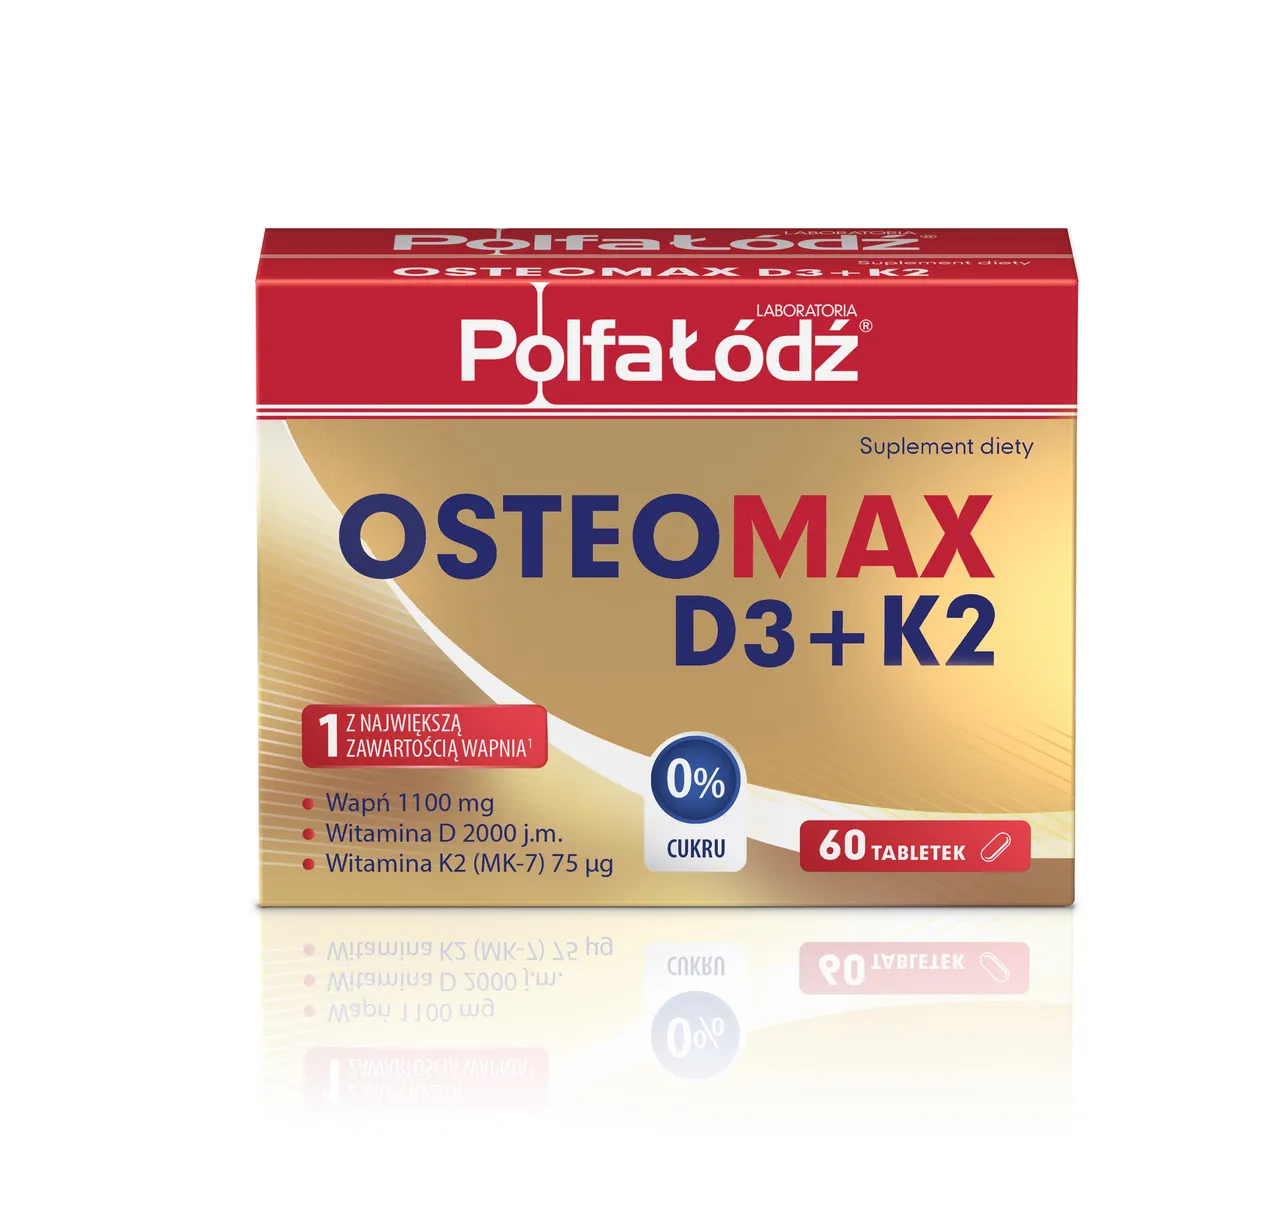 Osteomax D3+K2, suplement diety, 60 tabletek